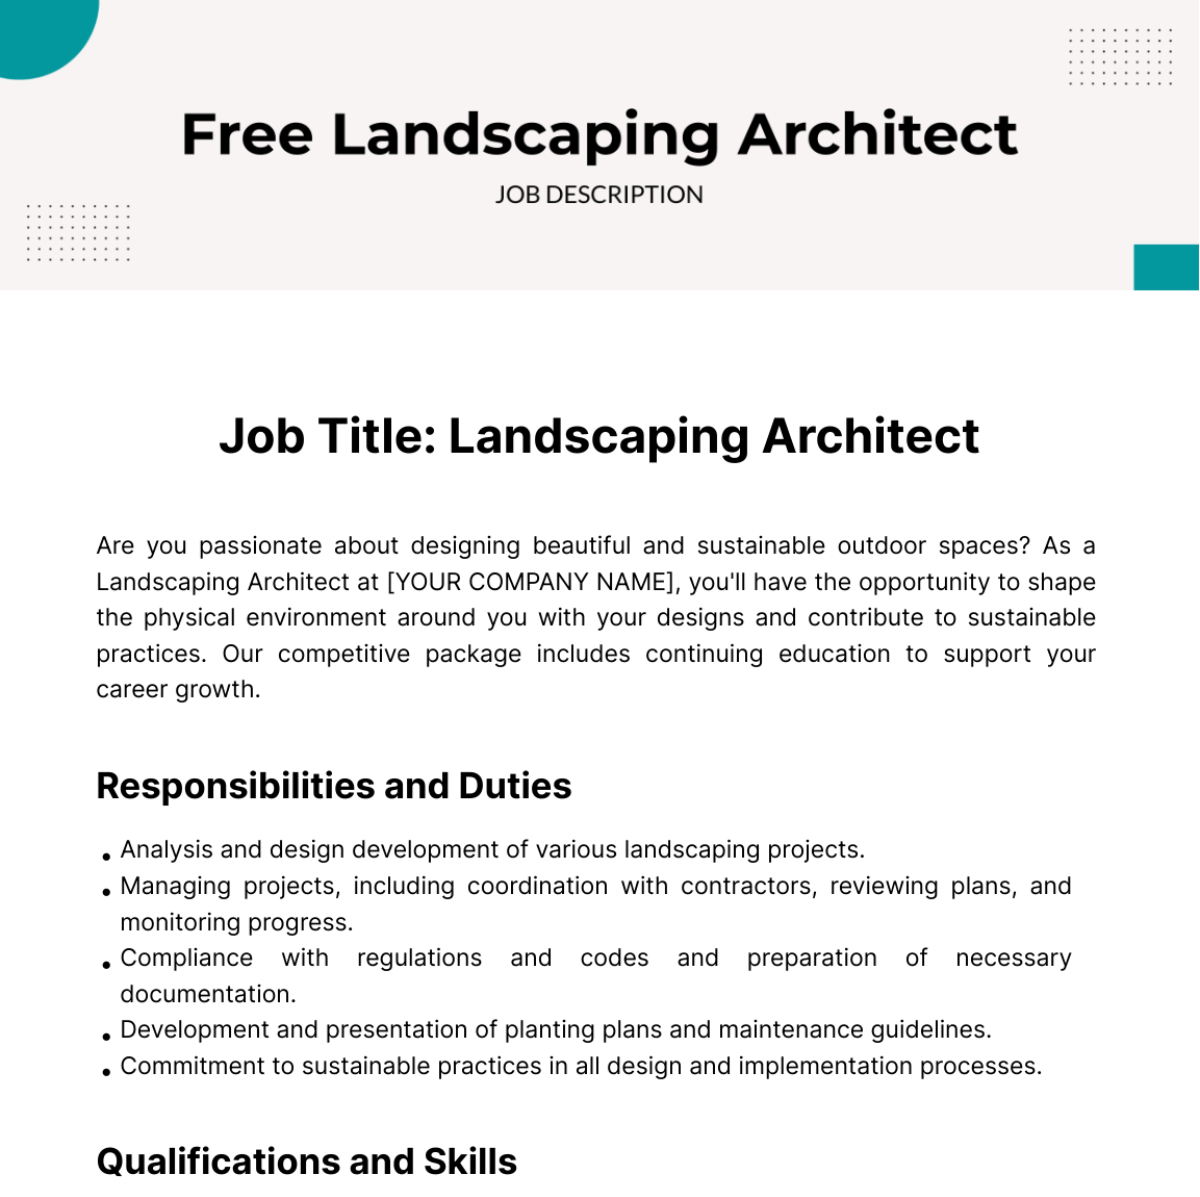 Free Landscaping Architect Job Description Template